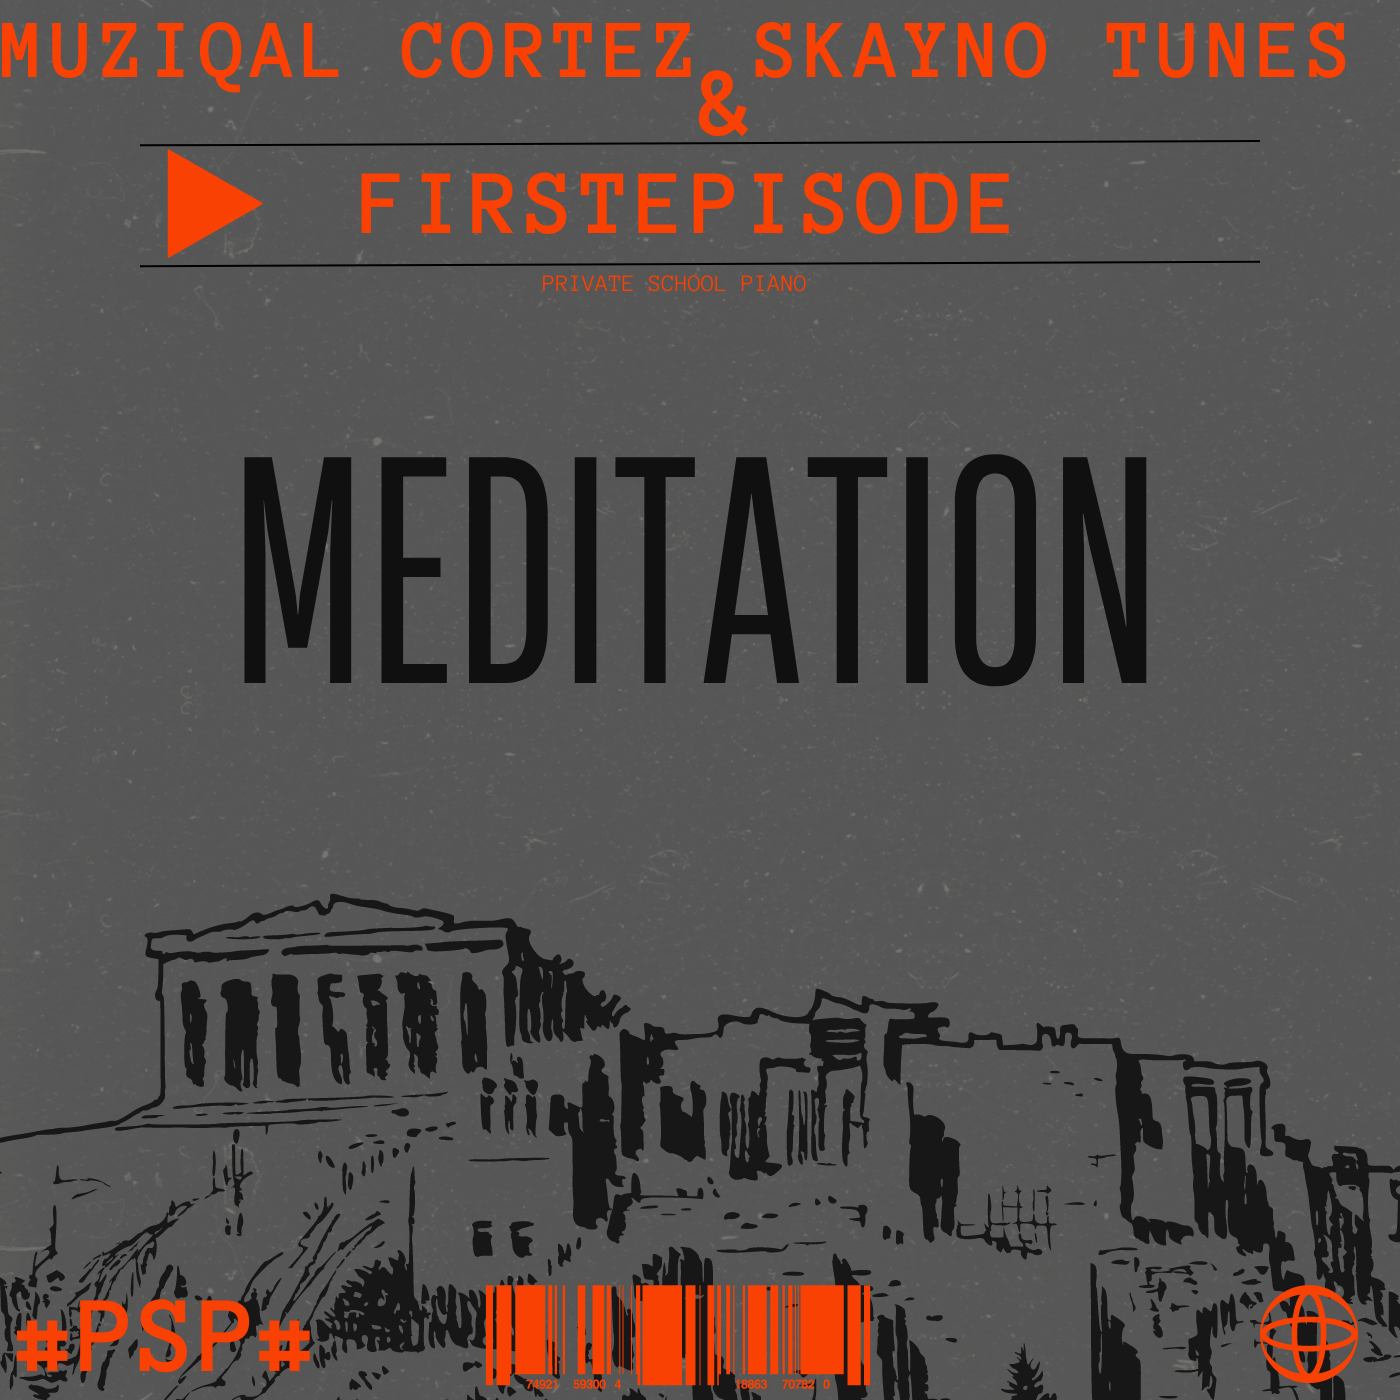 Meditation - Muziqal Cortez & Skayno Tunes